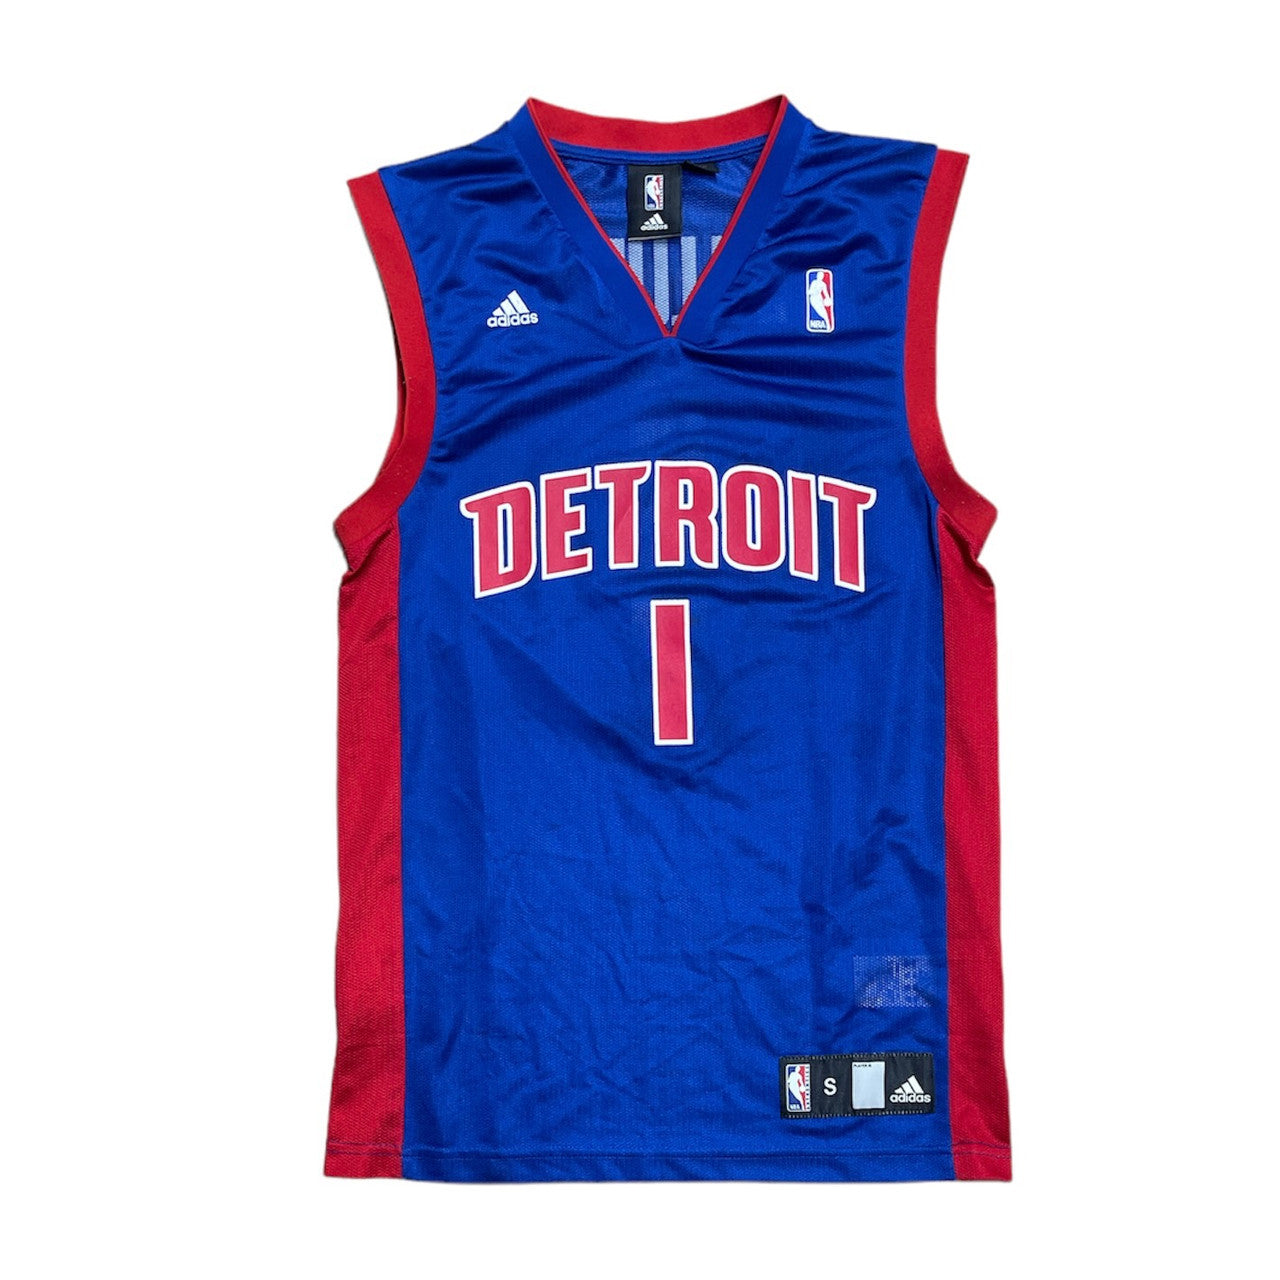 Adidas Detroit Pistons NBA Billups Jersey